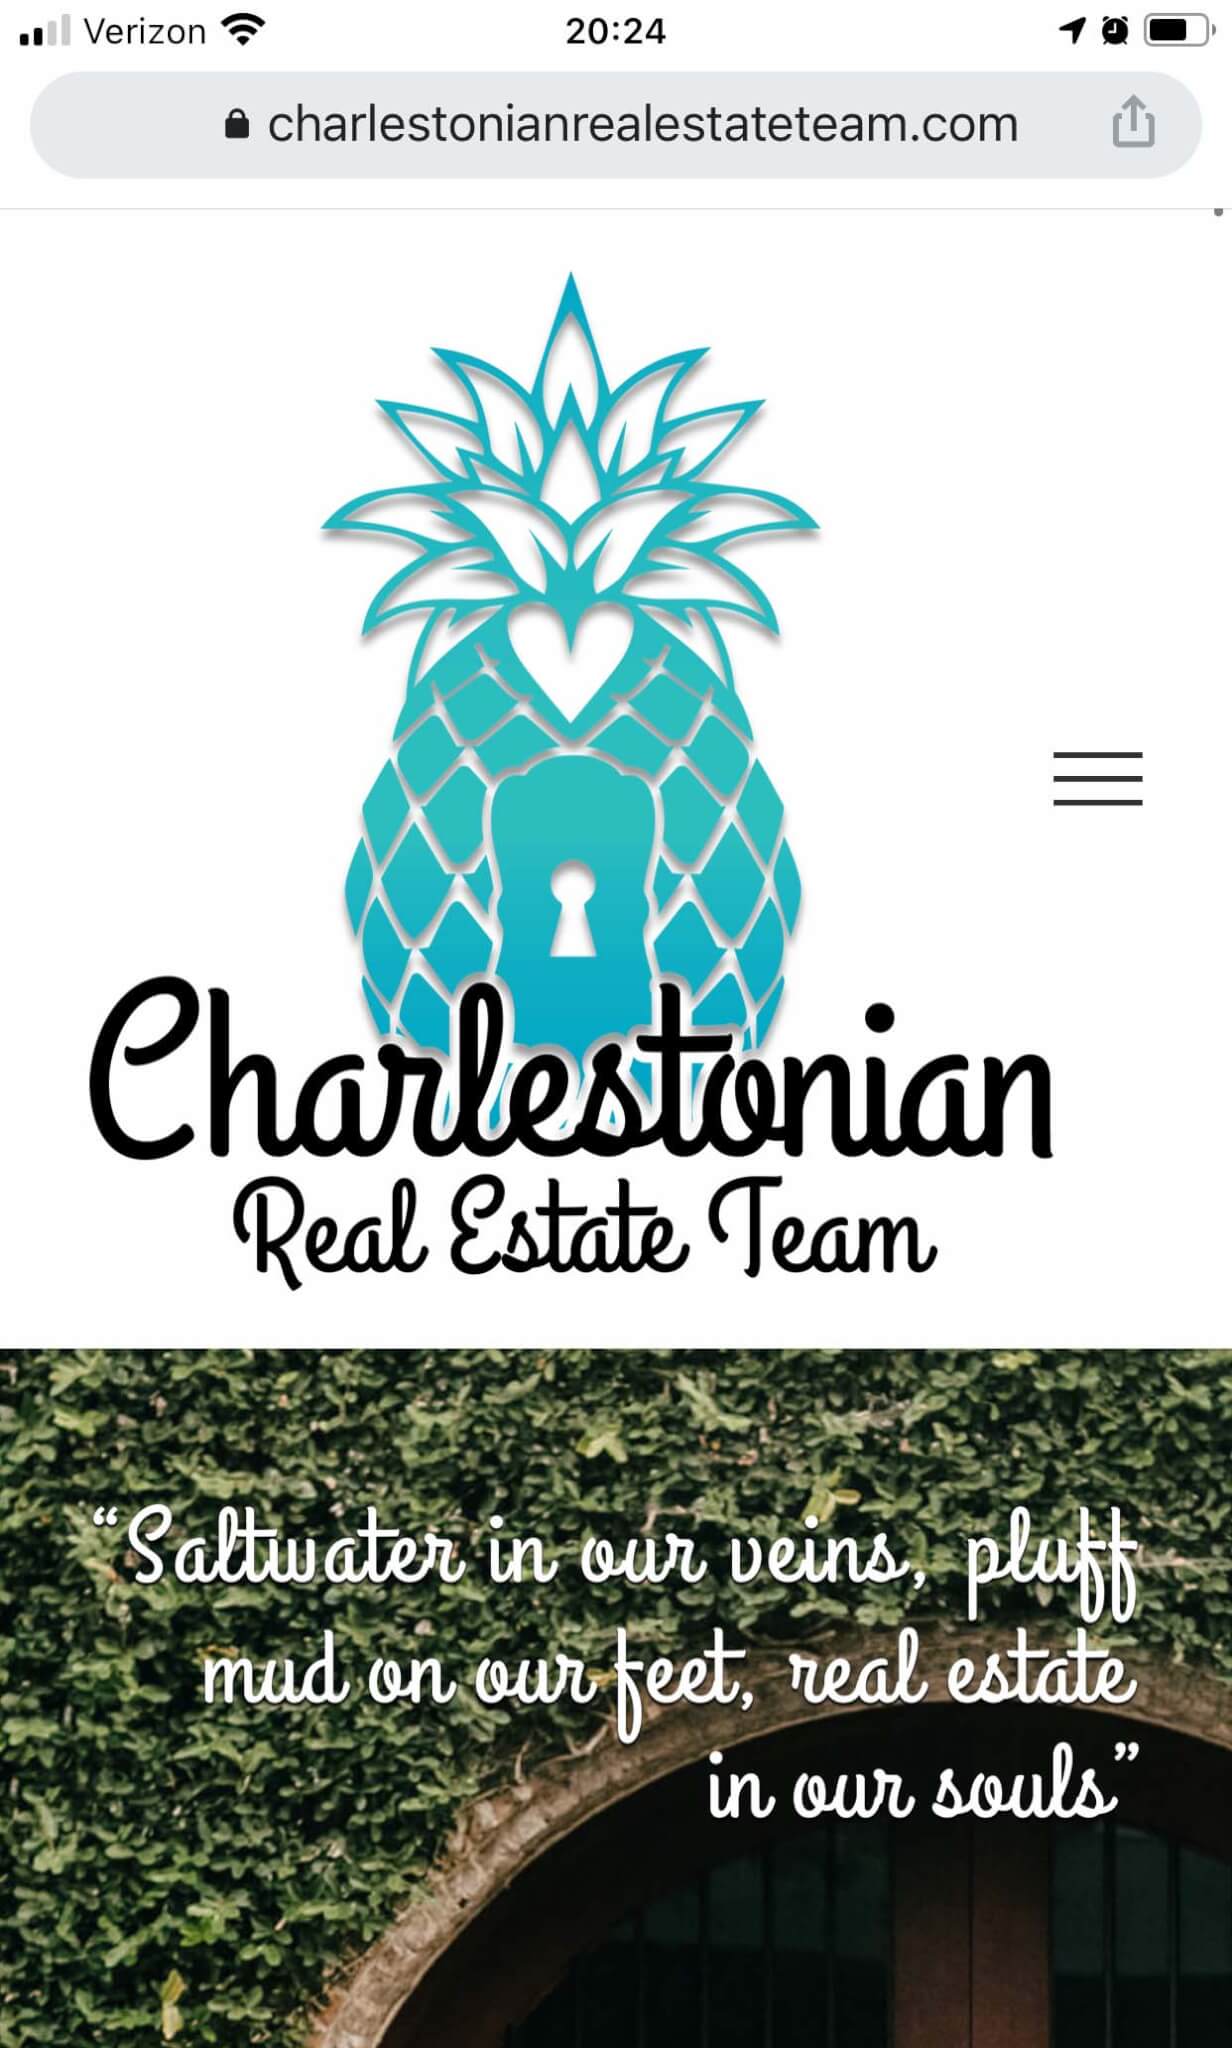 charlestonian real estate web design, idx web design company